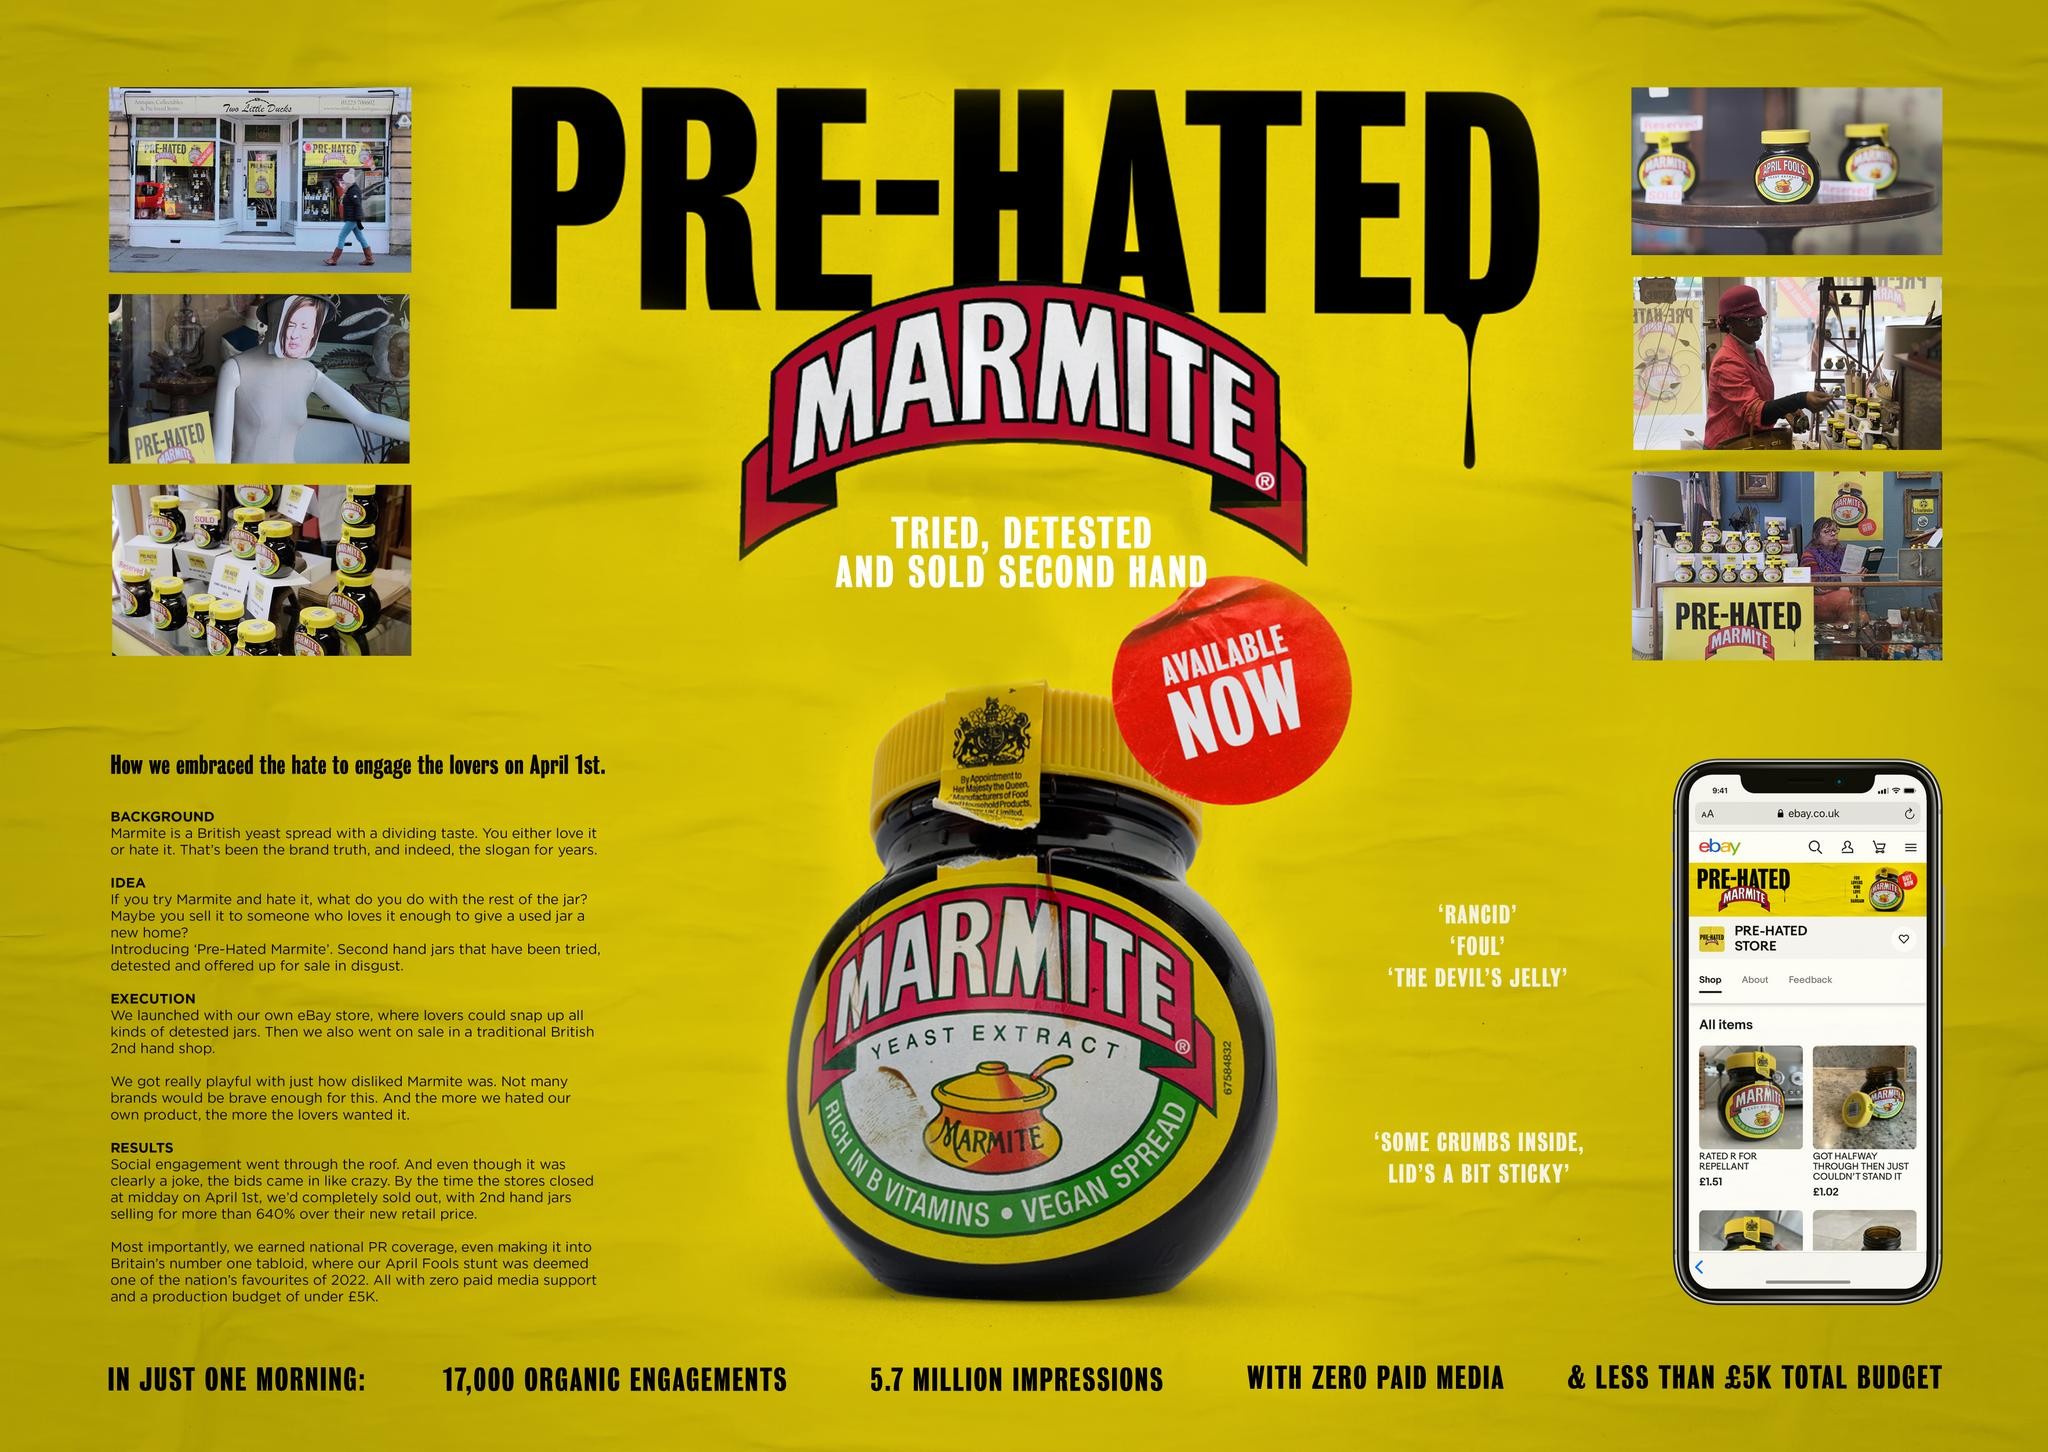 Pre-Hated Marmite